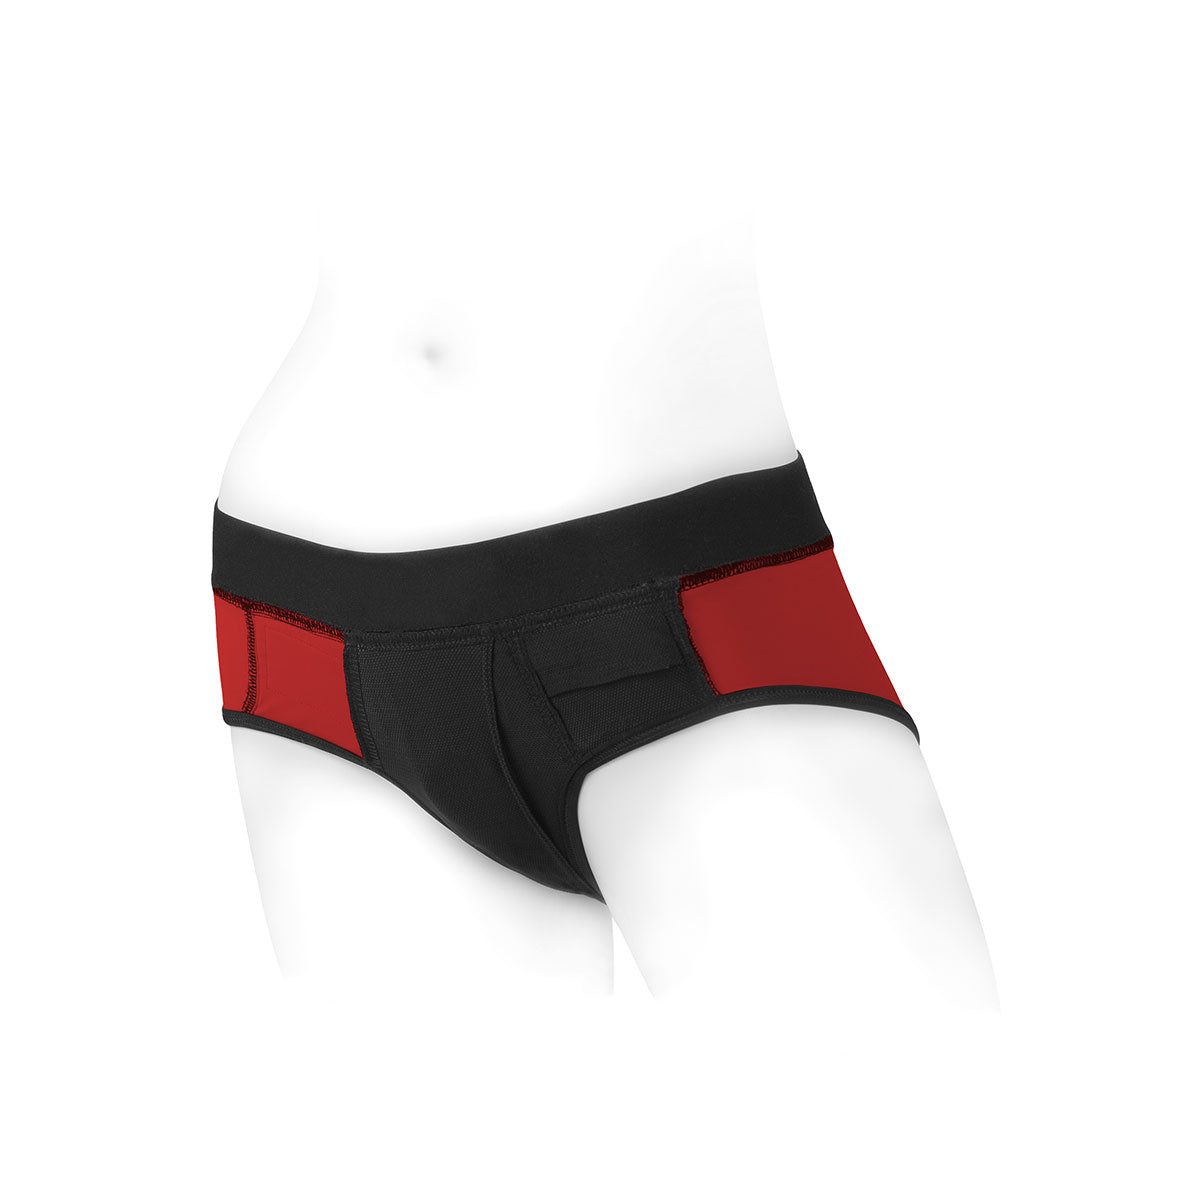 SpareParts Tomboi Harness Red/Black Nylon